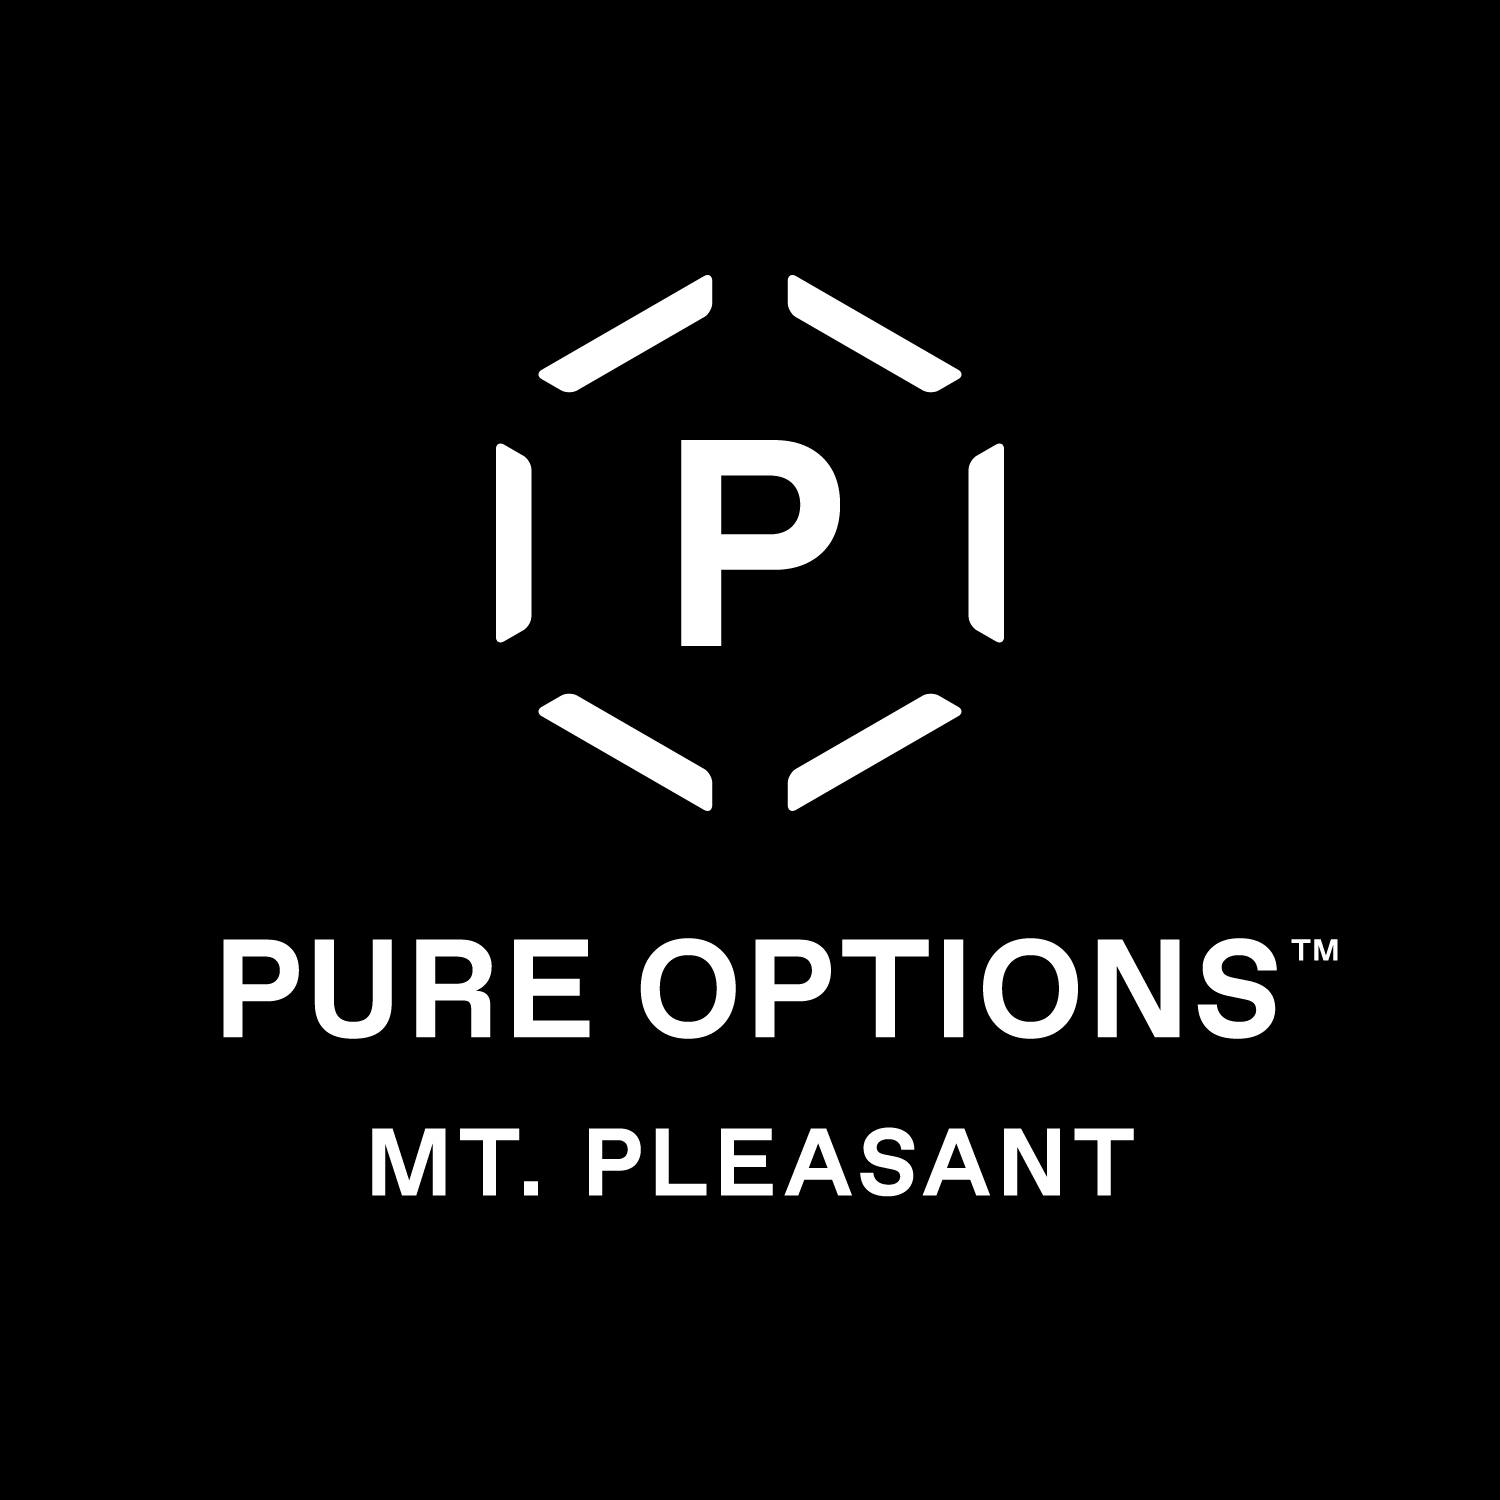 Pure Options Mt Pleasant logo